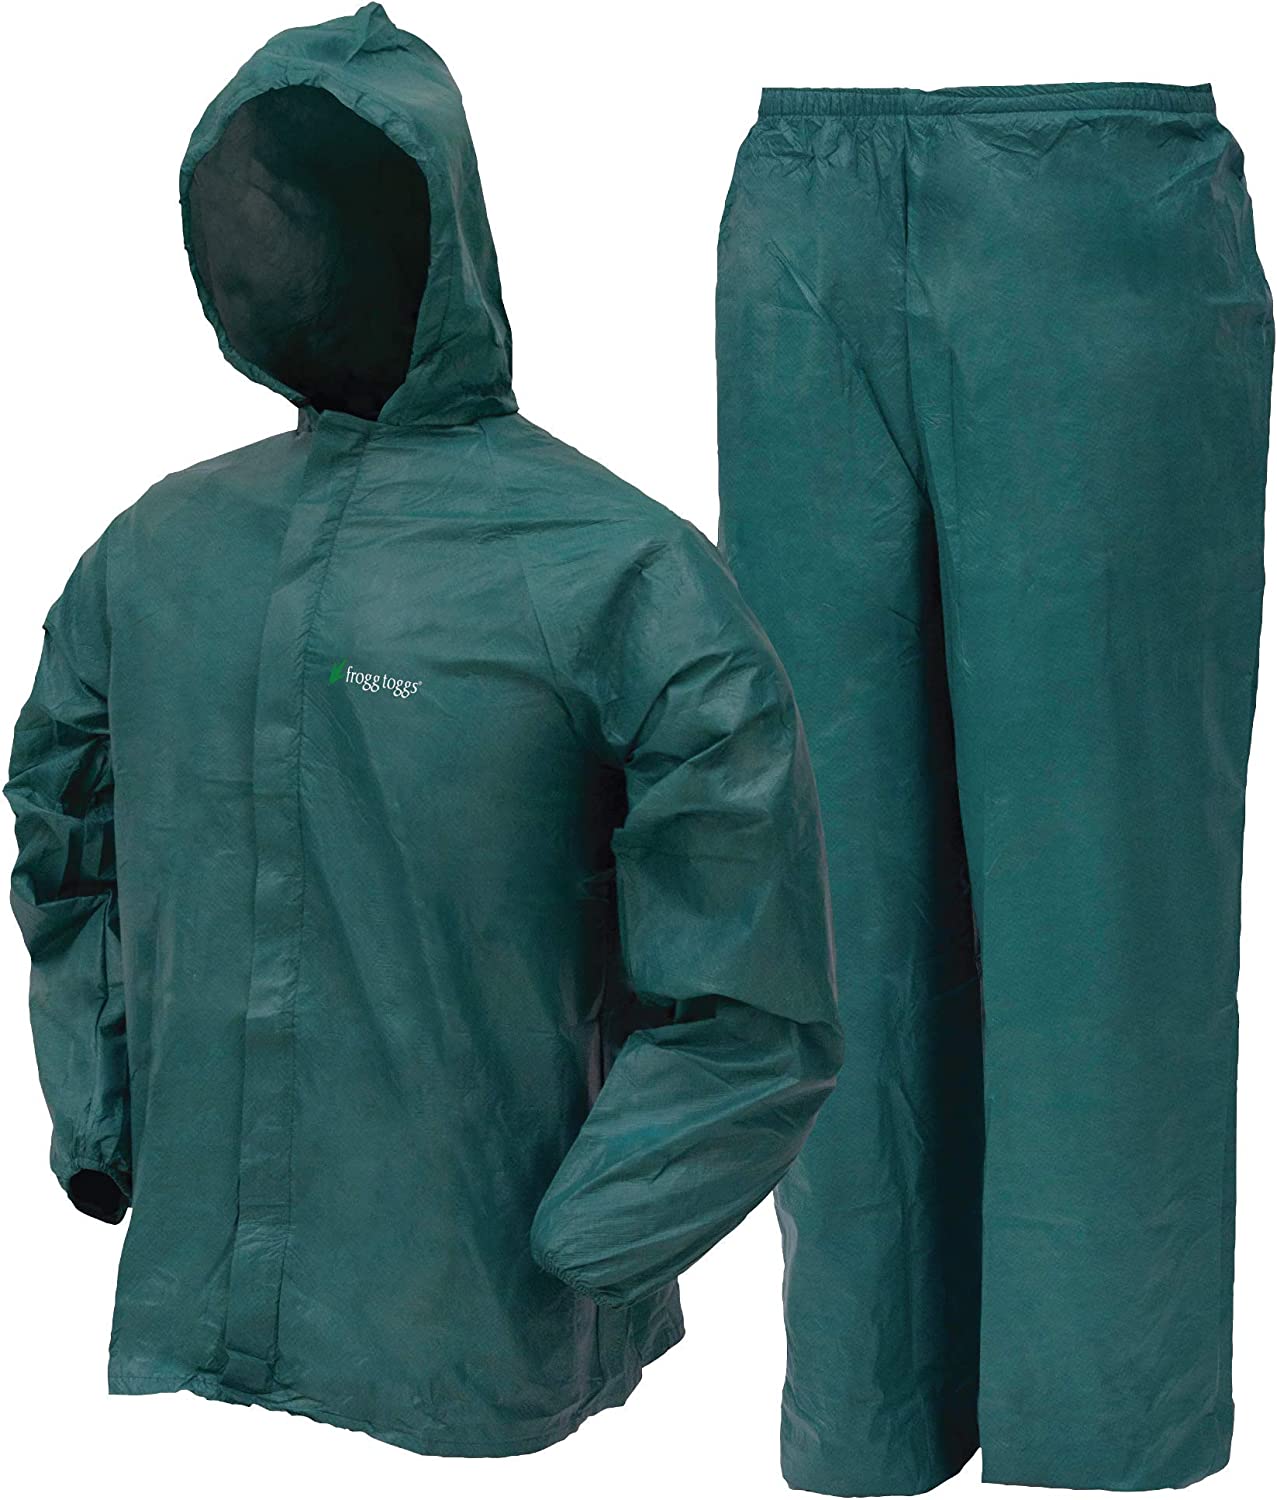 Frogg Toggs Ultra-lite2 Rain Suit W/stuff Sack – X-large, Royal Green